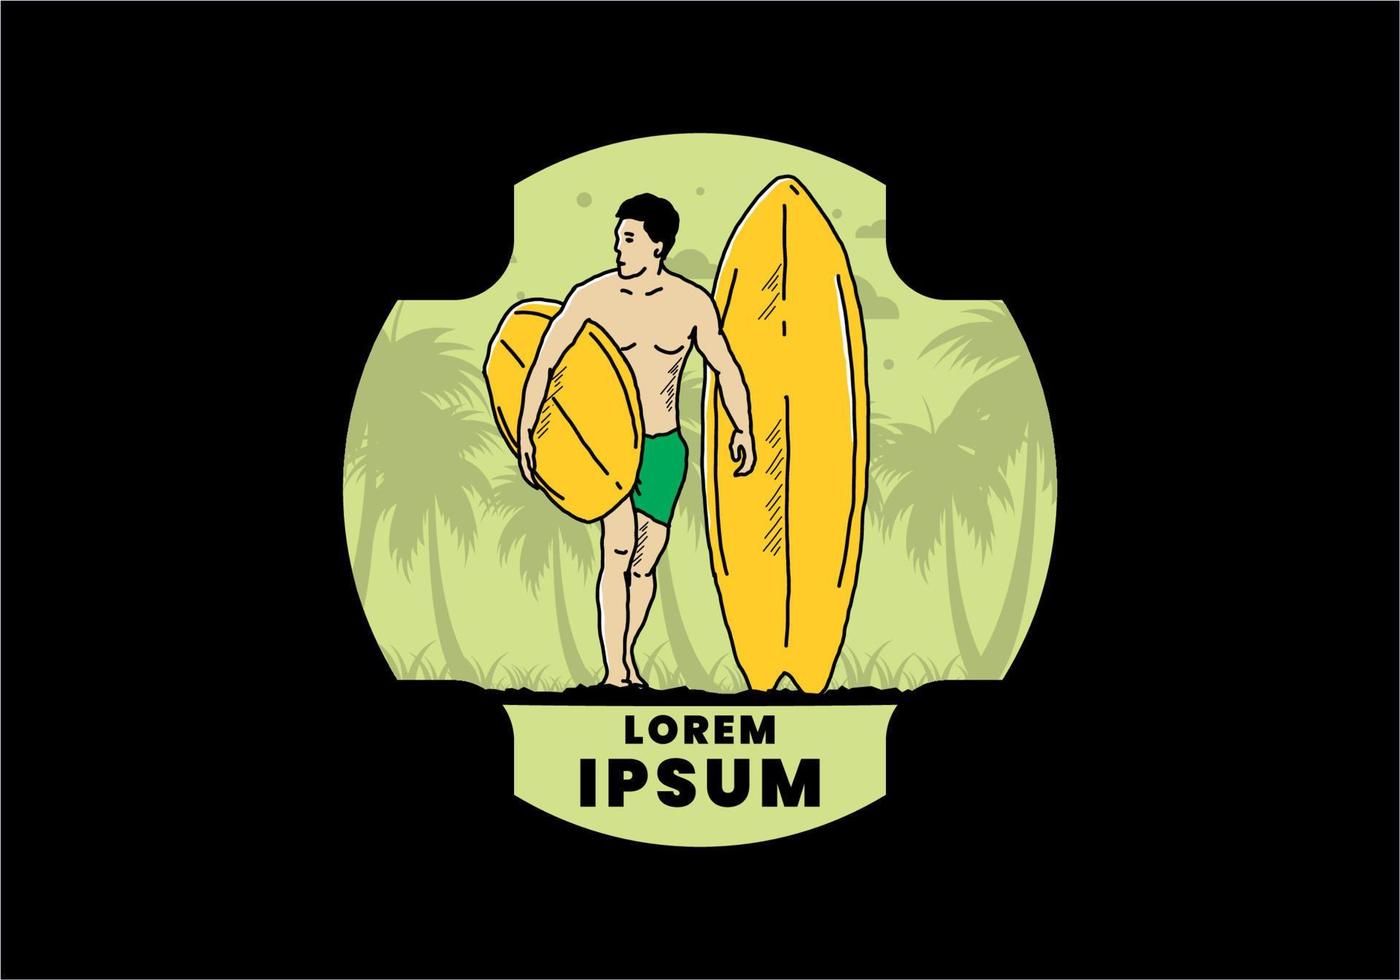 The shirtless man holding surfboard illustration vector